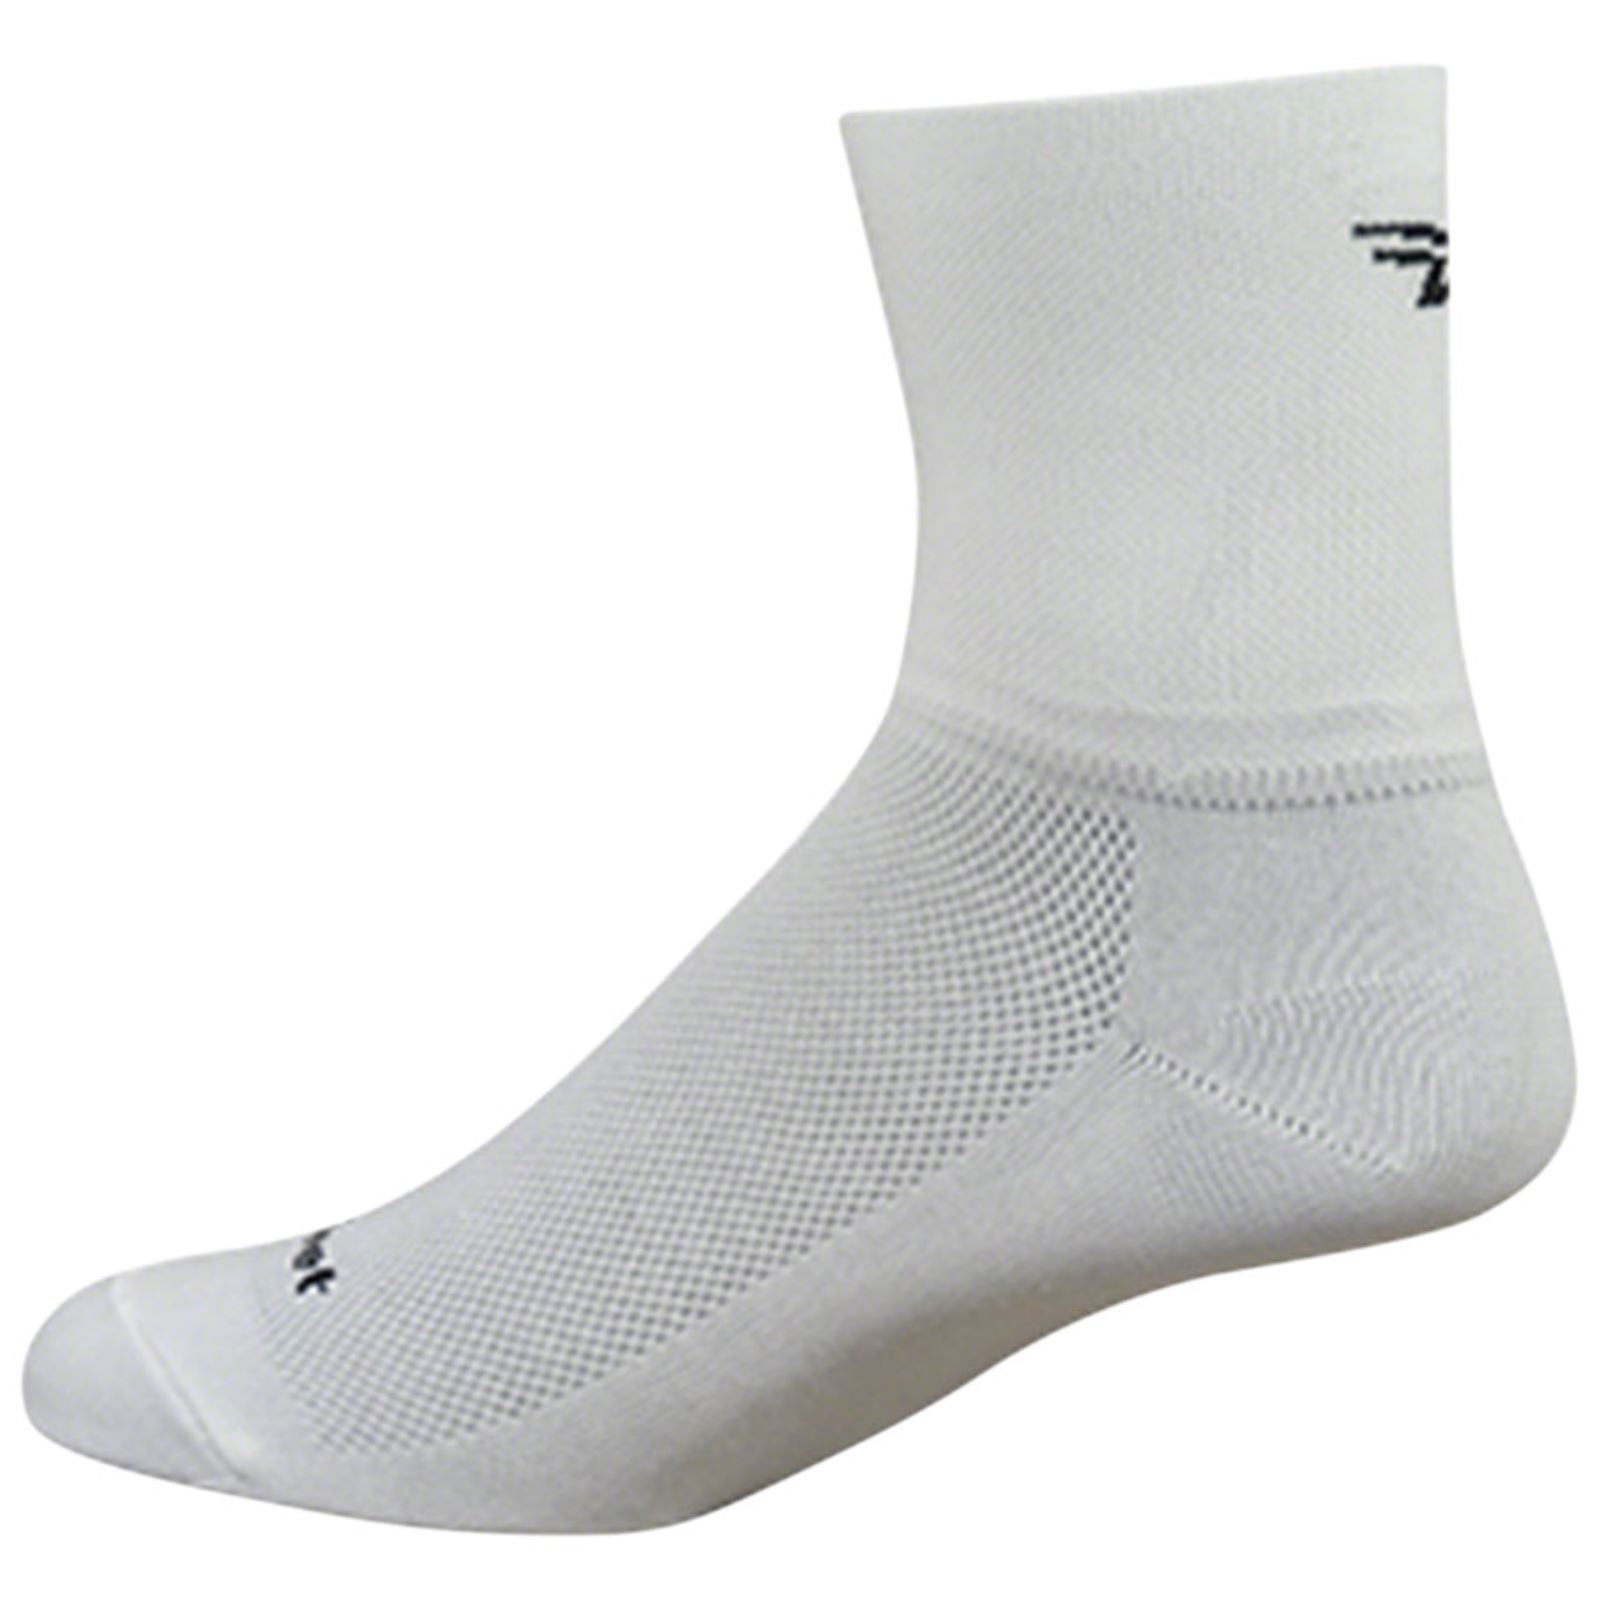 DeFeet Aireator 2-3" Cuff Socks - White